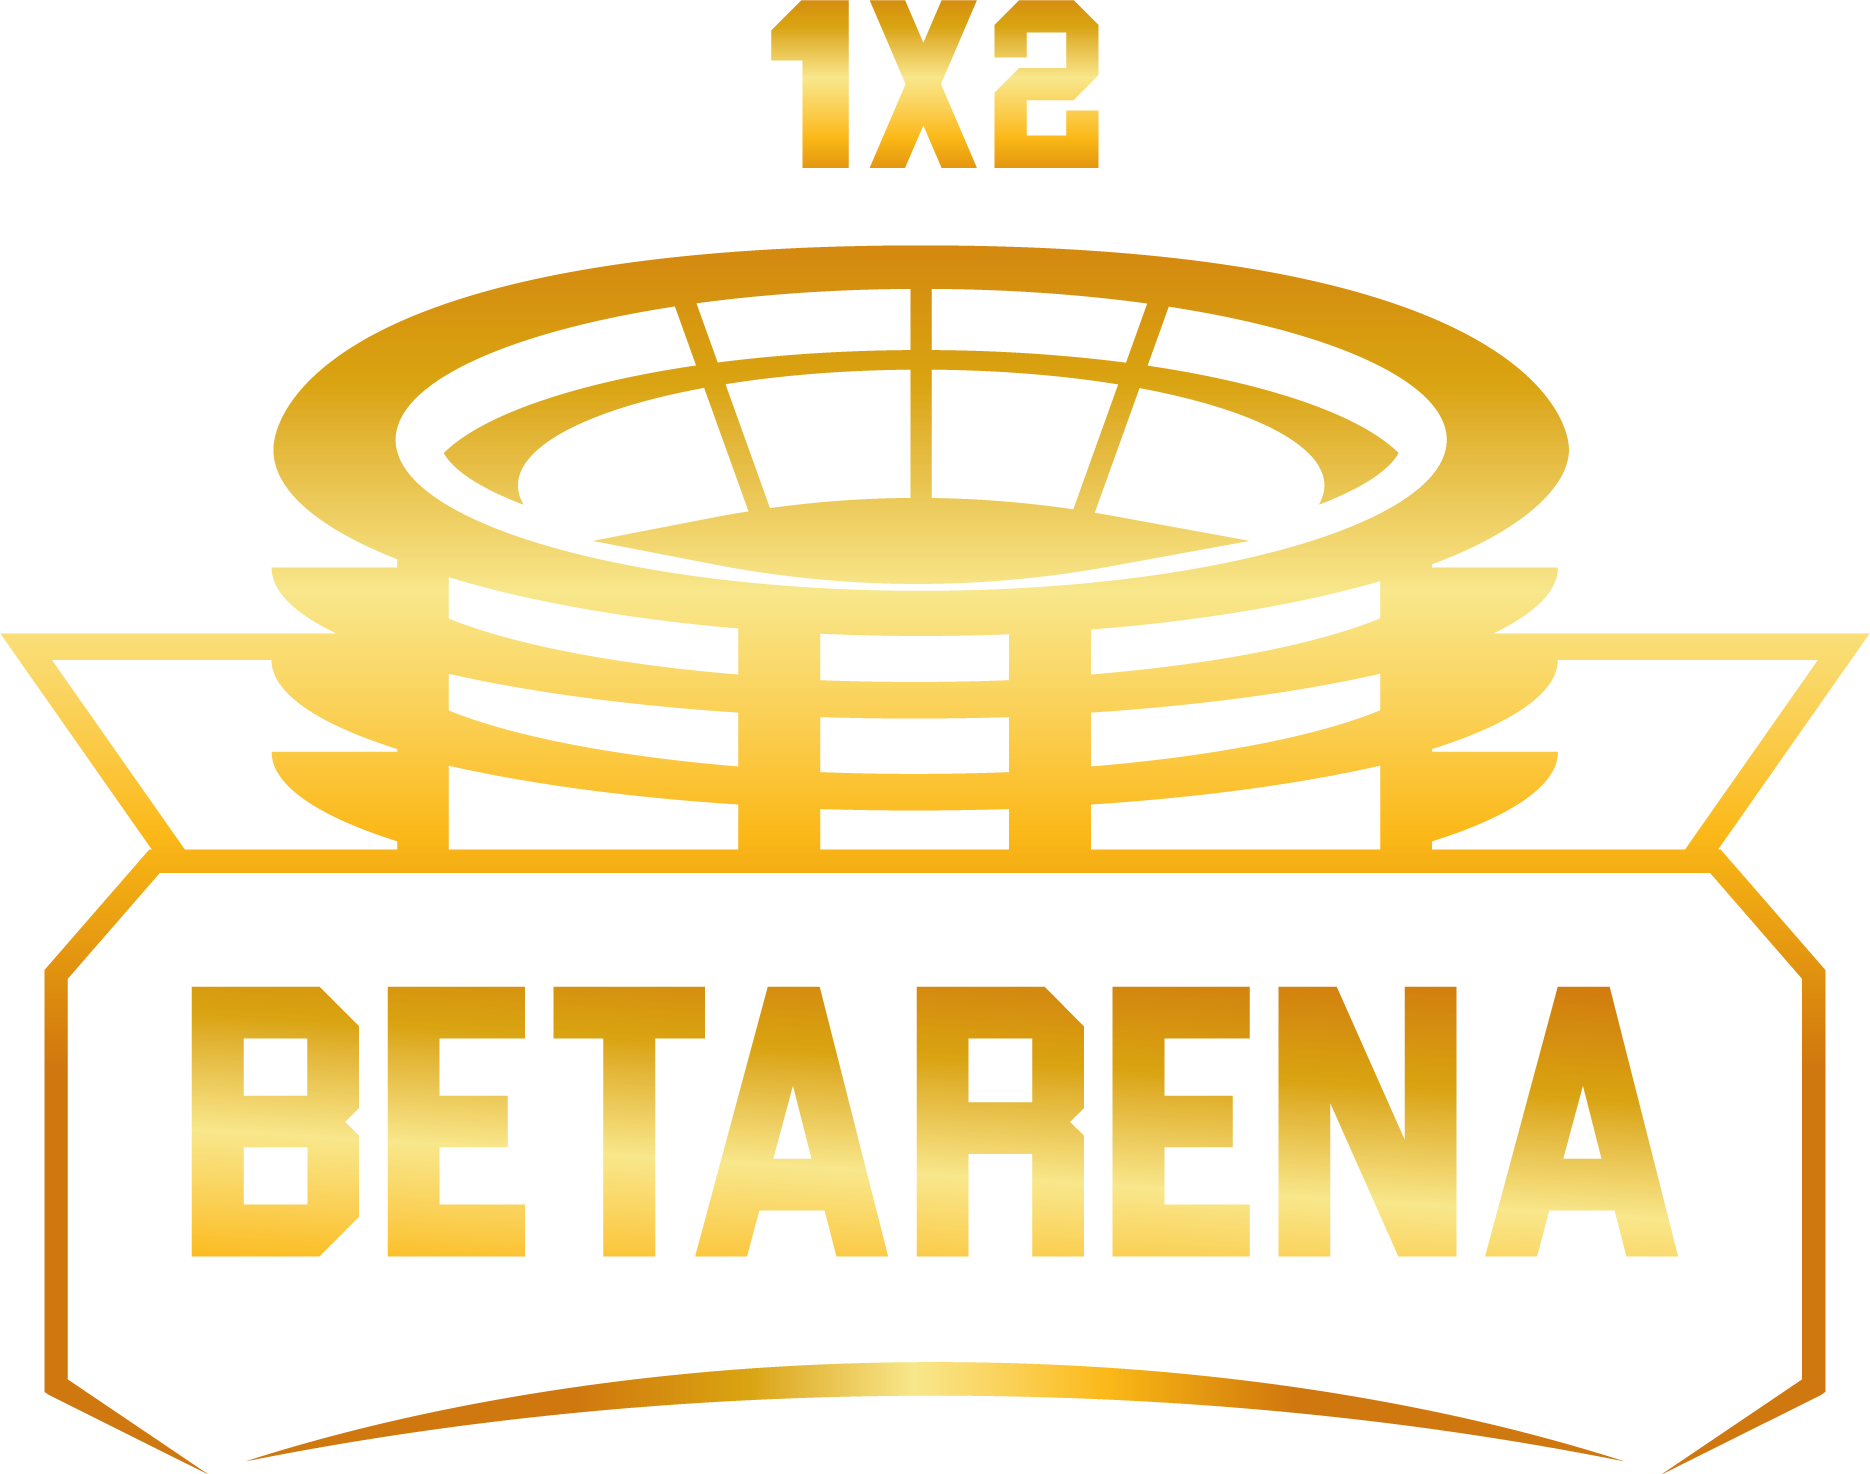 Betarena.pl